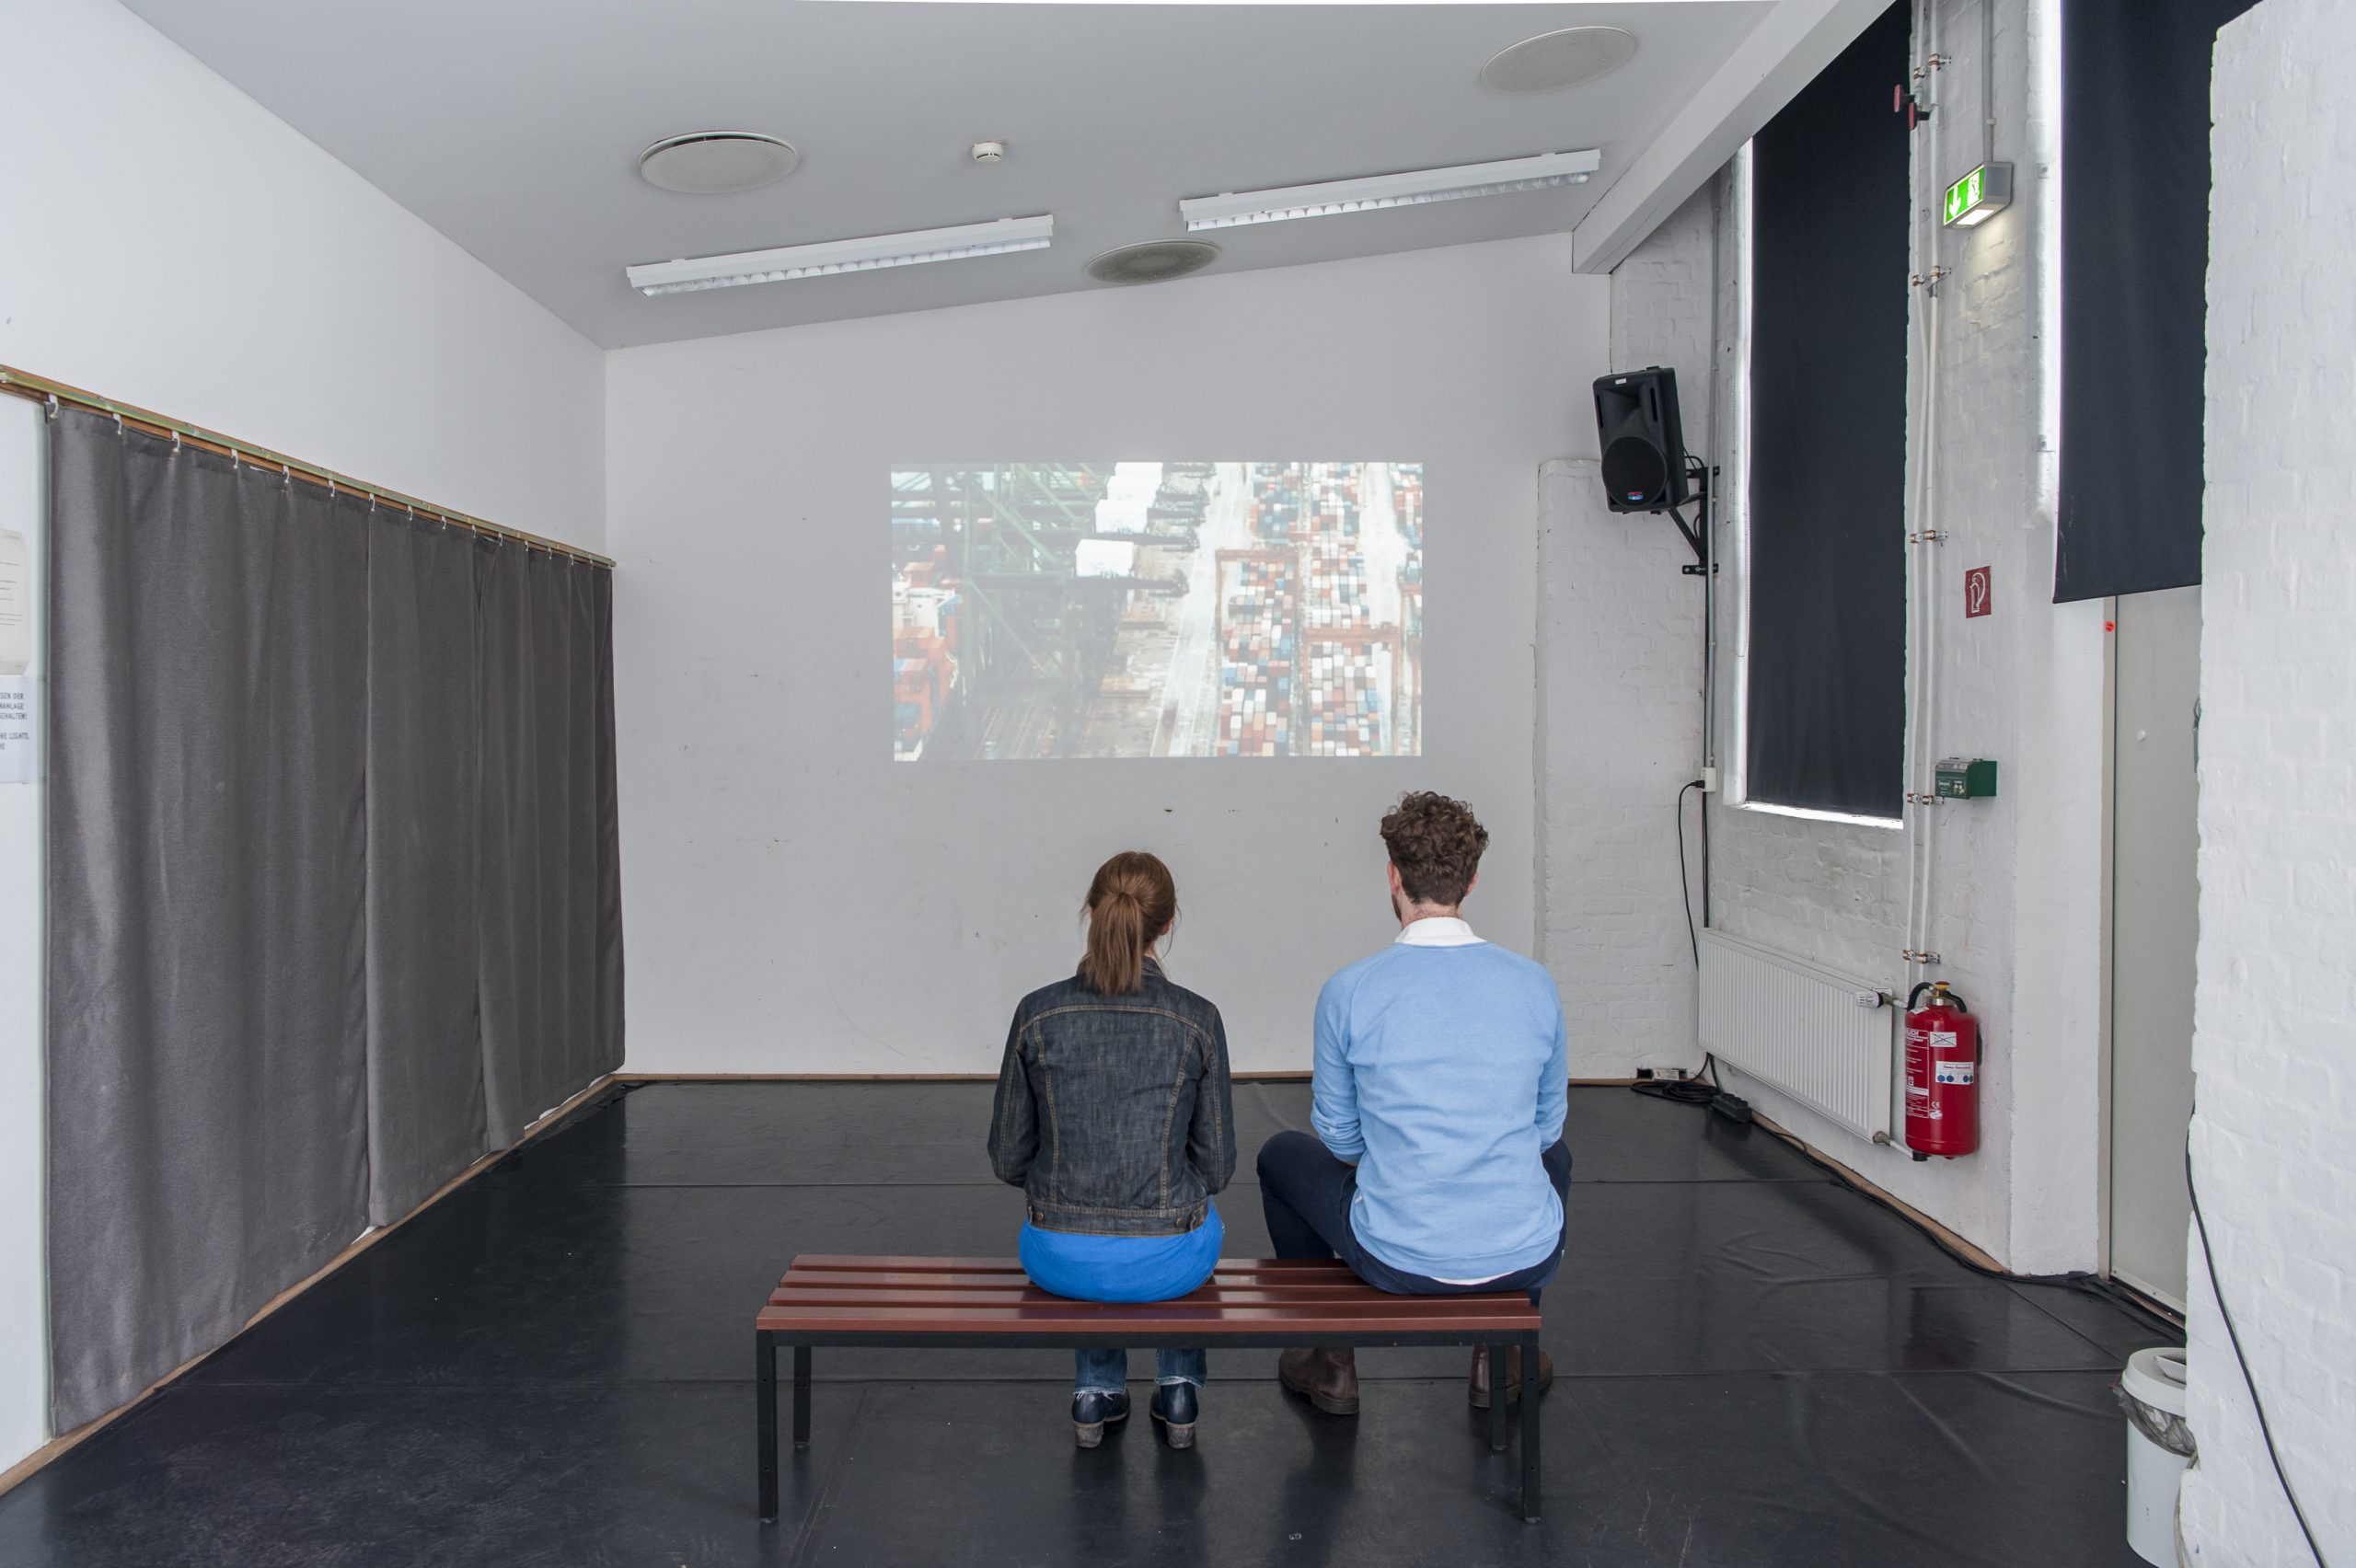 Moritz Frischkorn, On Logistics and Choreography – A Research Installation, 2017, Hamburg